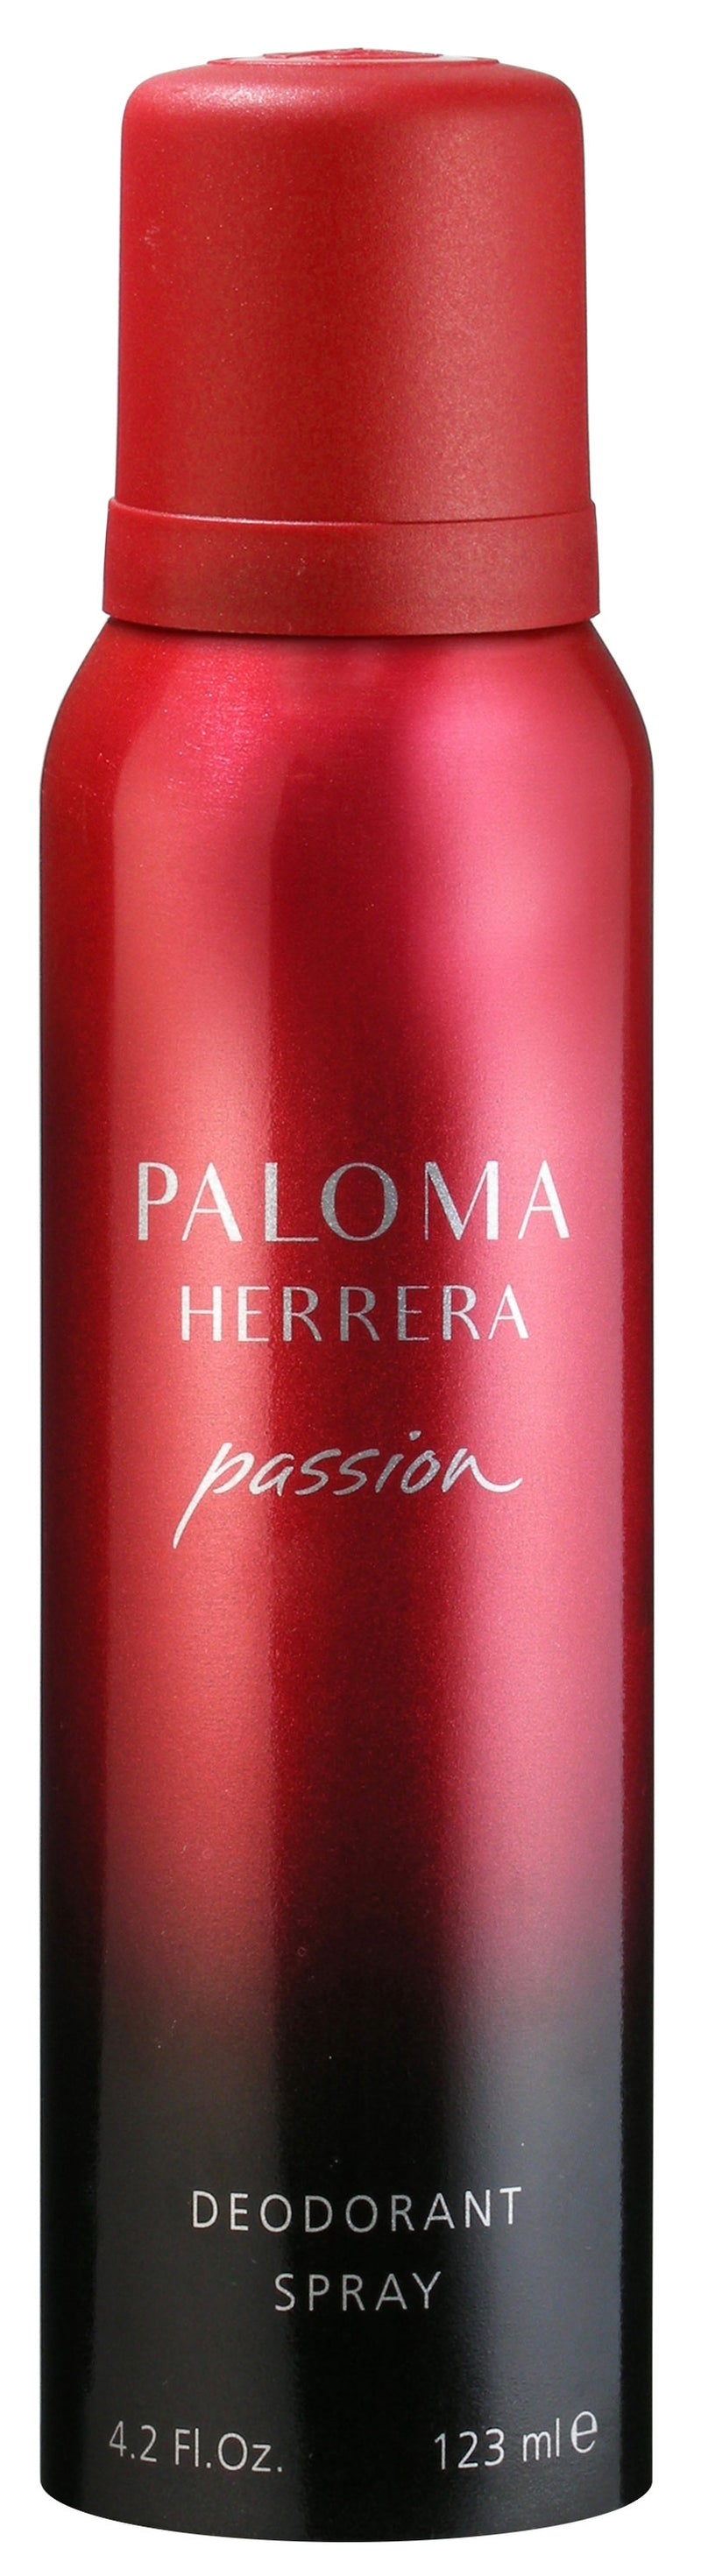 Desodorante Paloma Herrera Passion 123ml